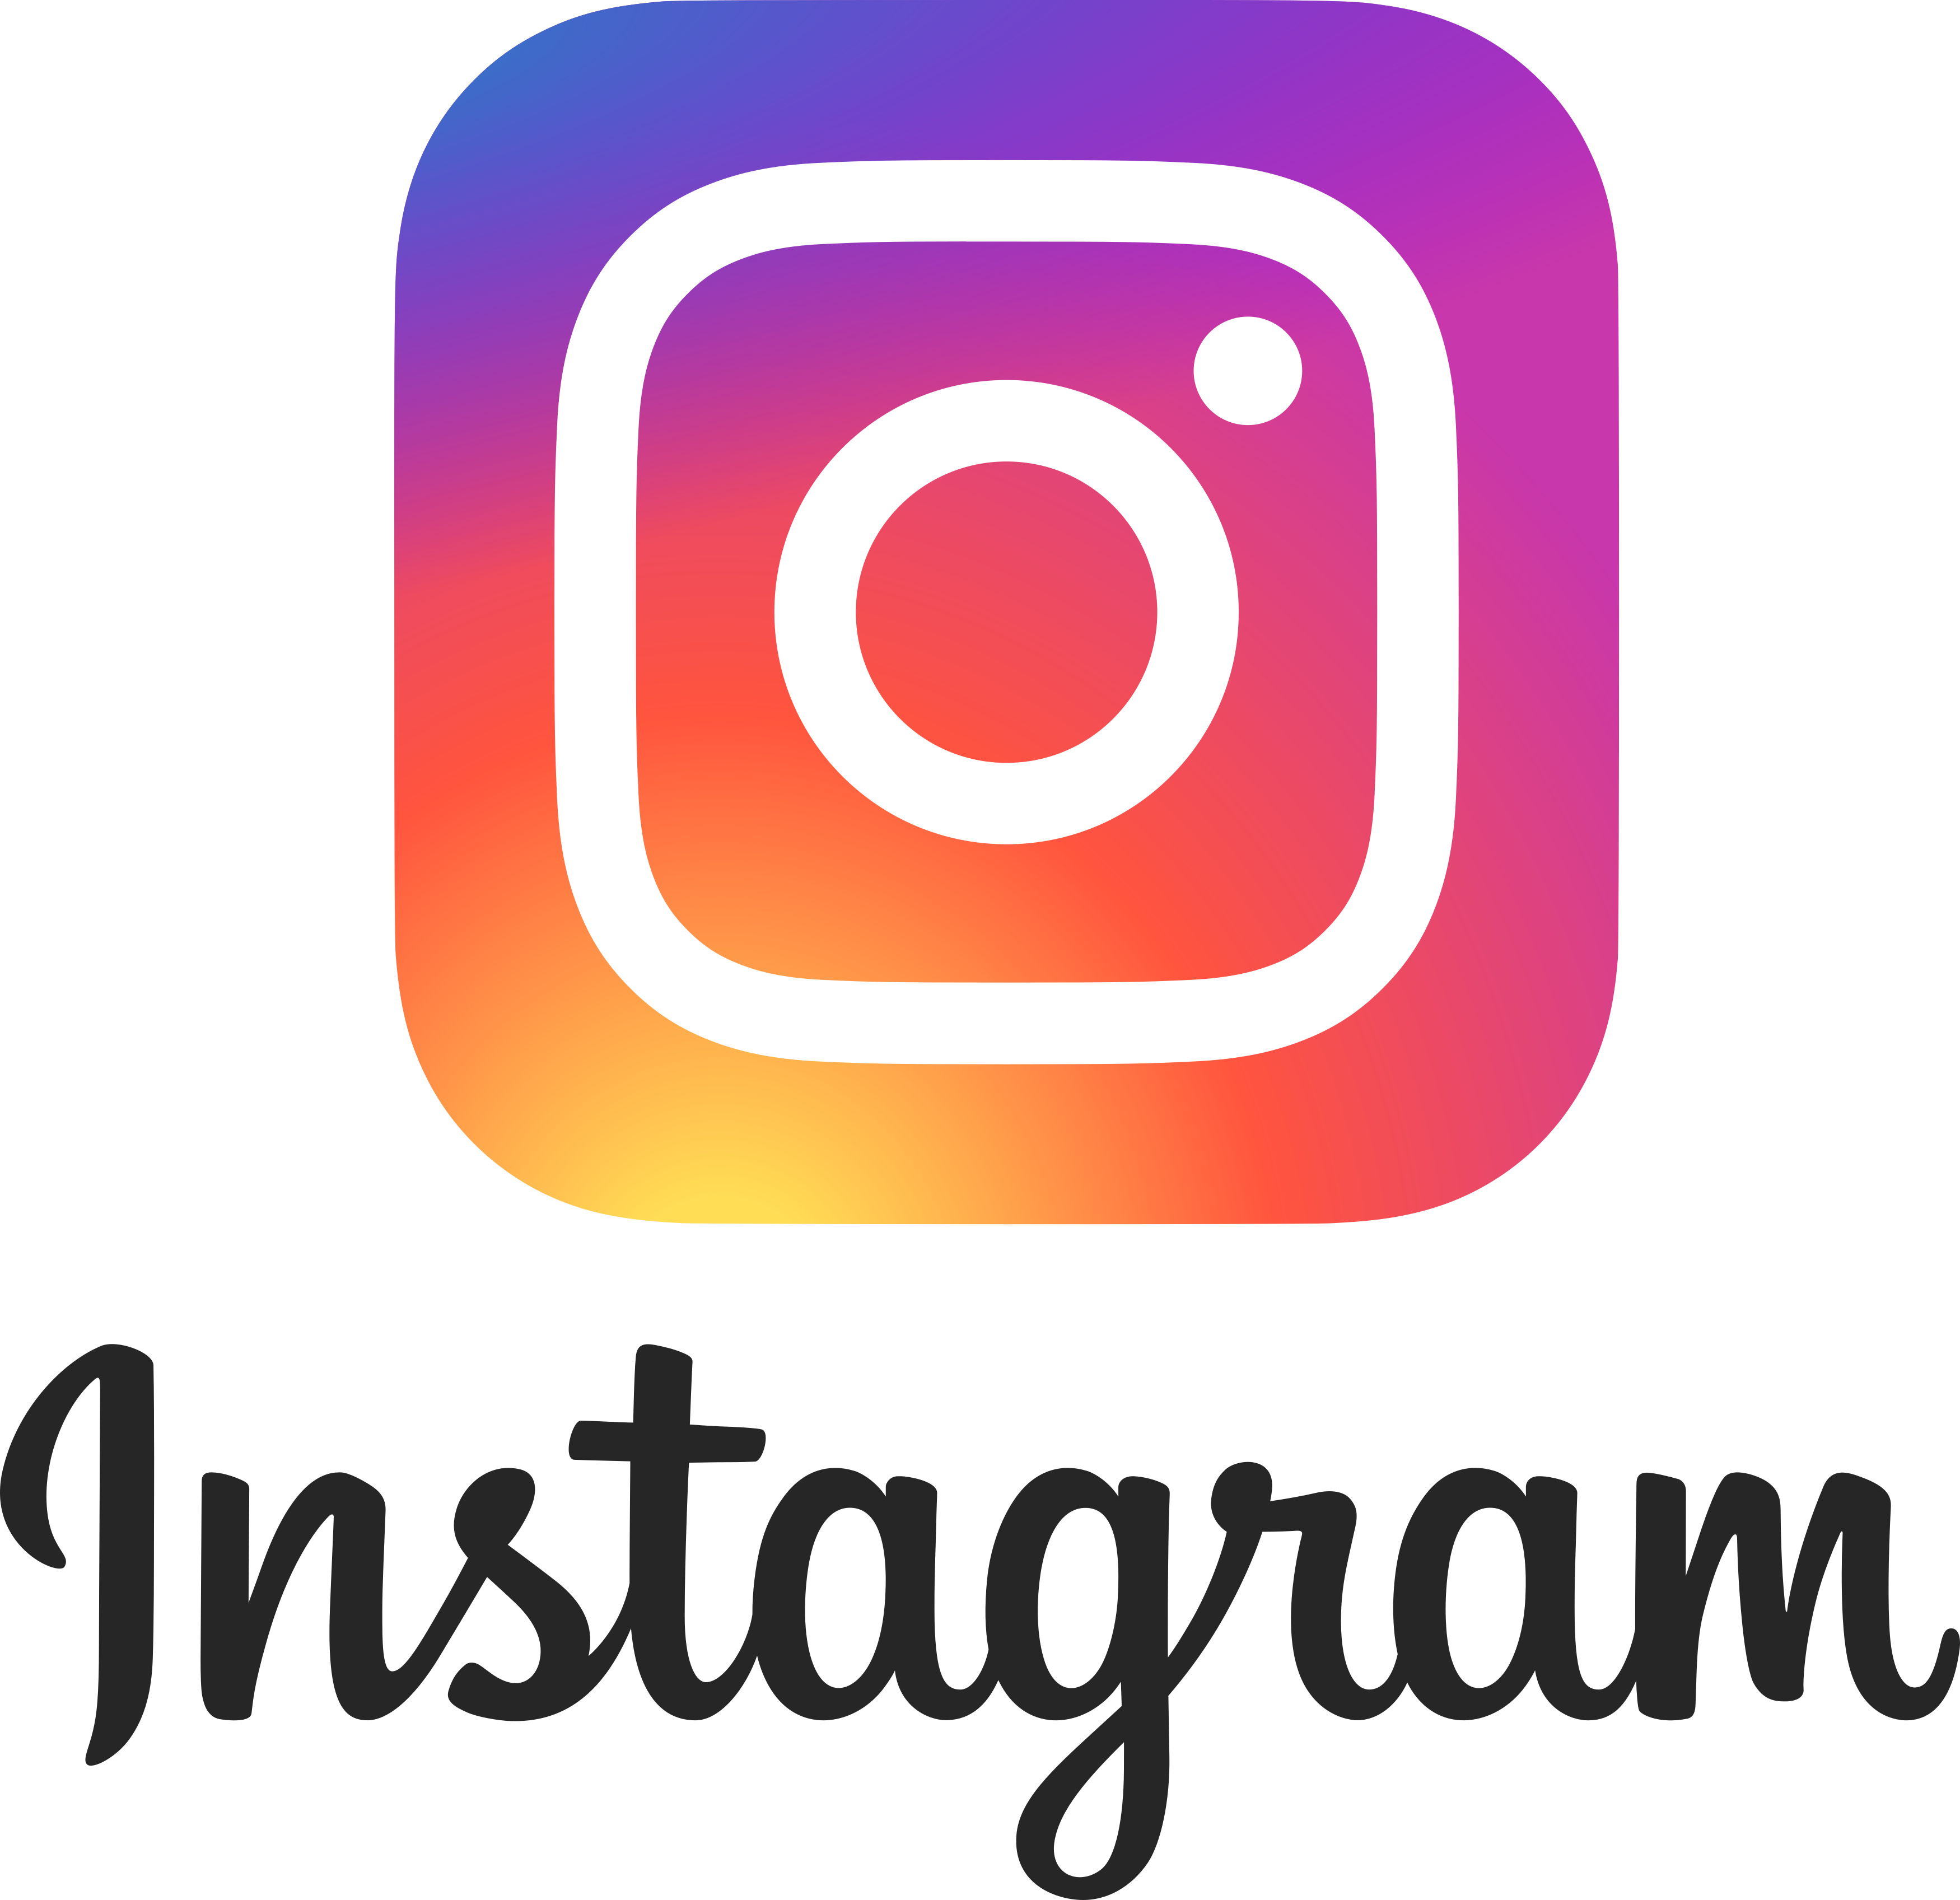 instagram-png-instagram-logo-2-png-8-de-abril-de-2017-927-kb-3500-3393-3500.png, 646kB